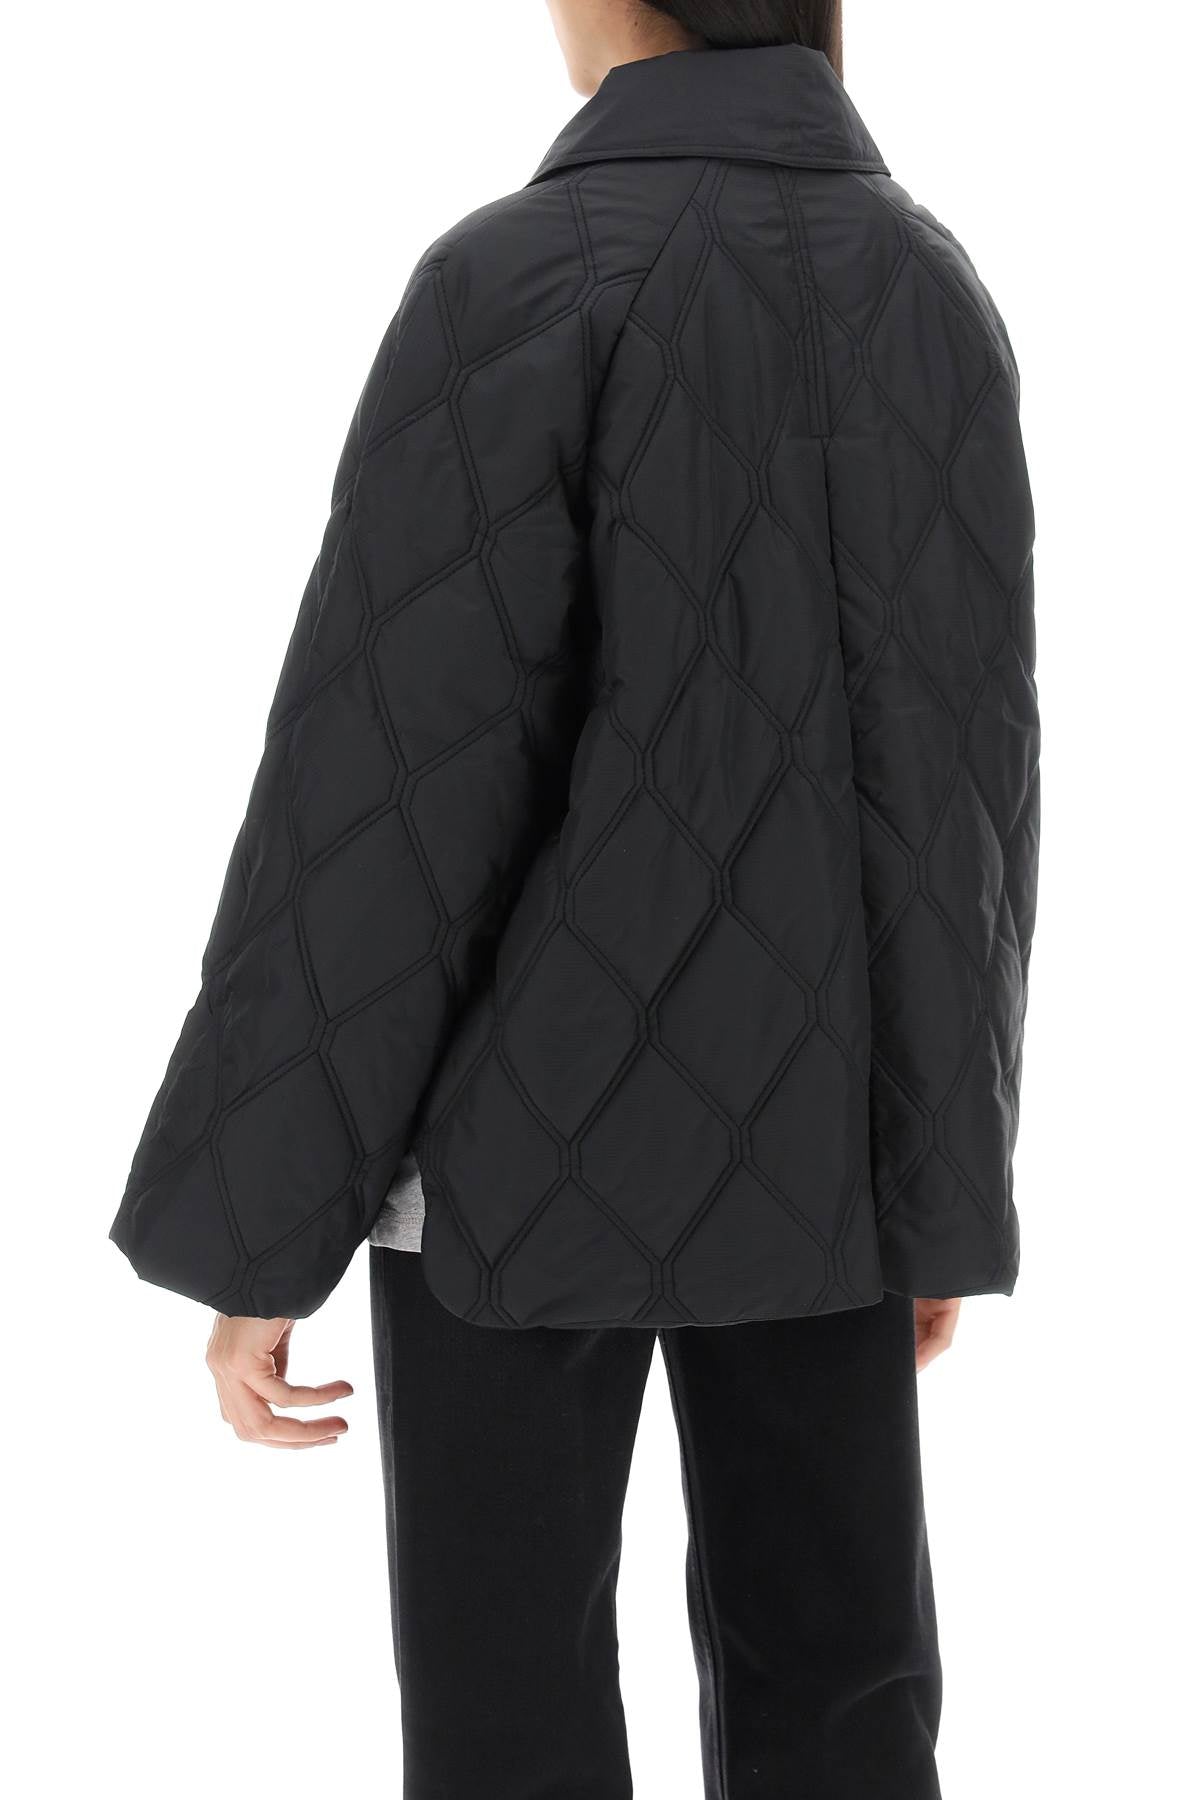 Ganni Ganni quilted oversized jacket